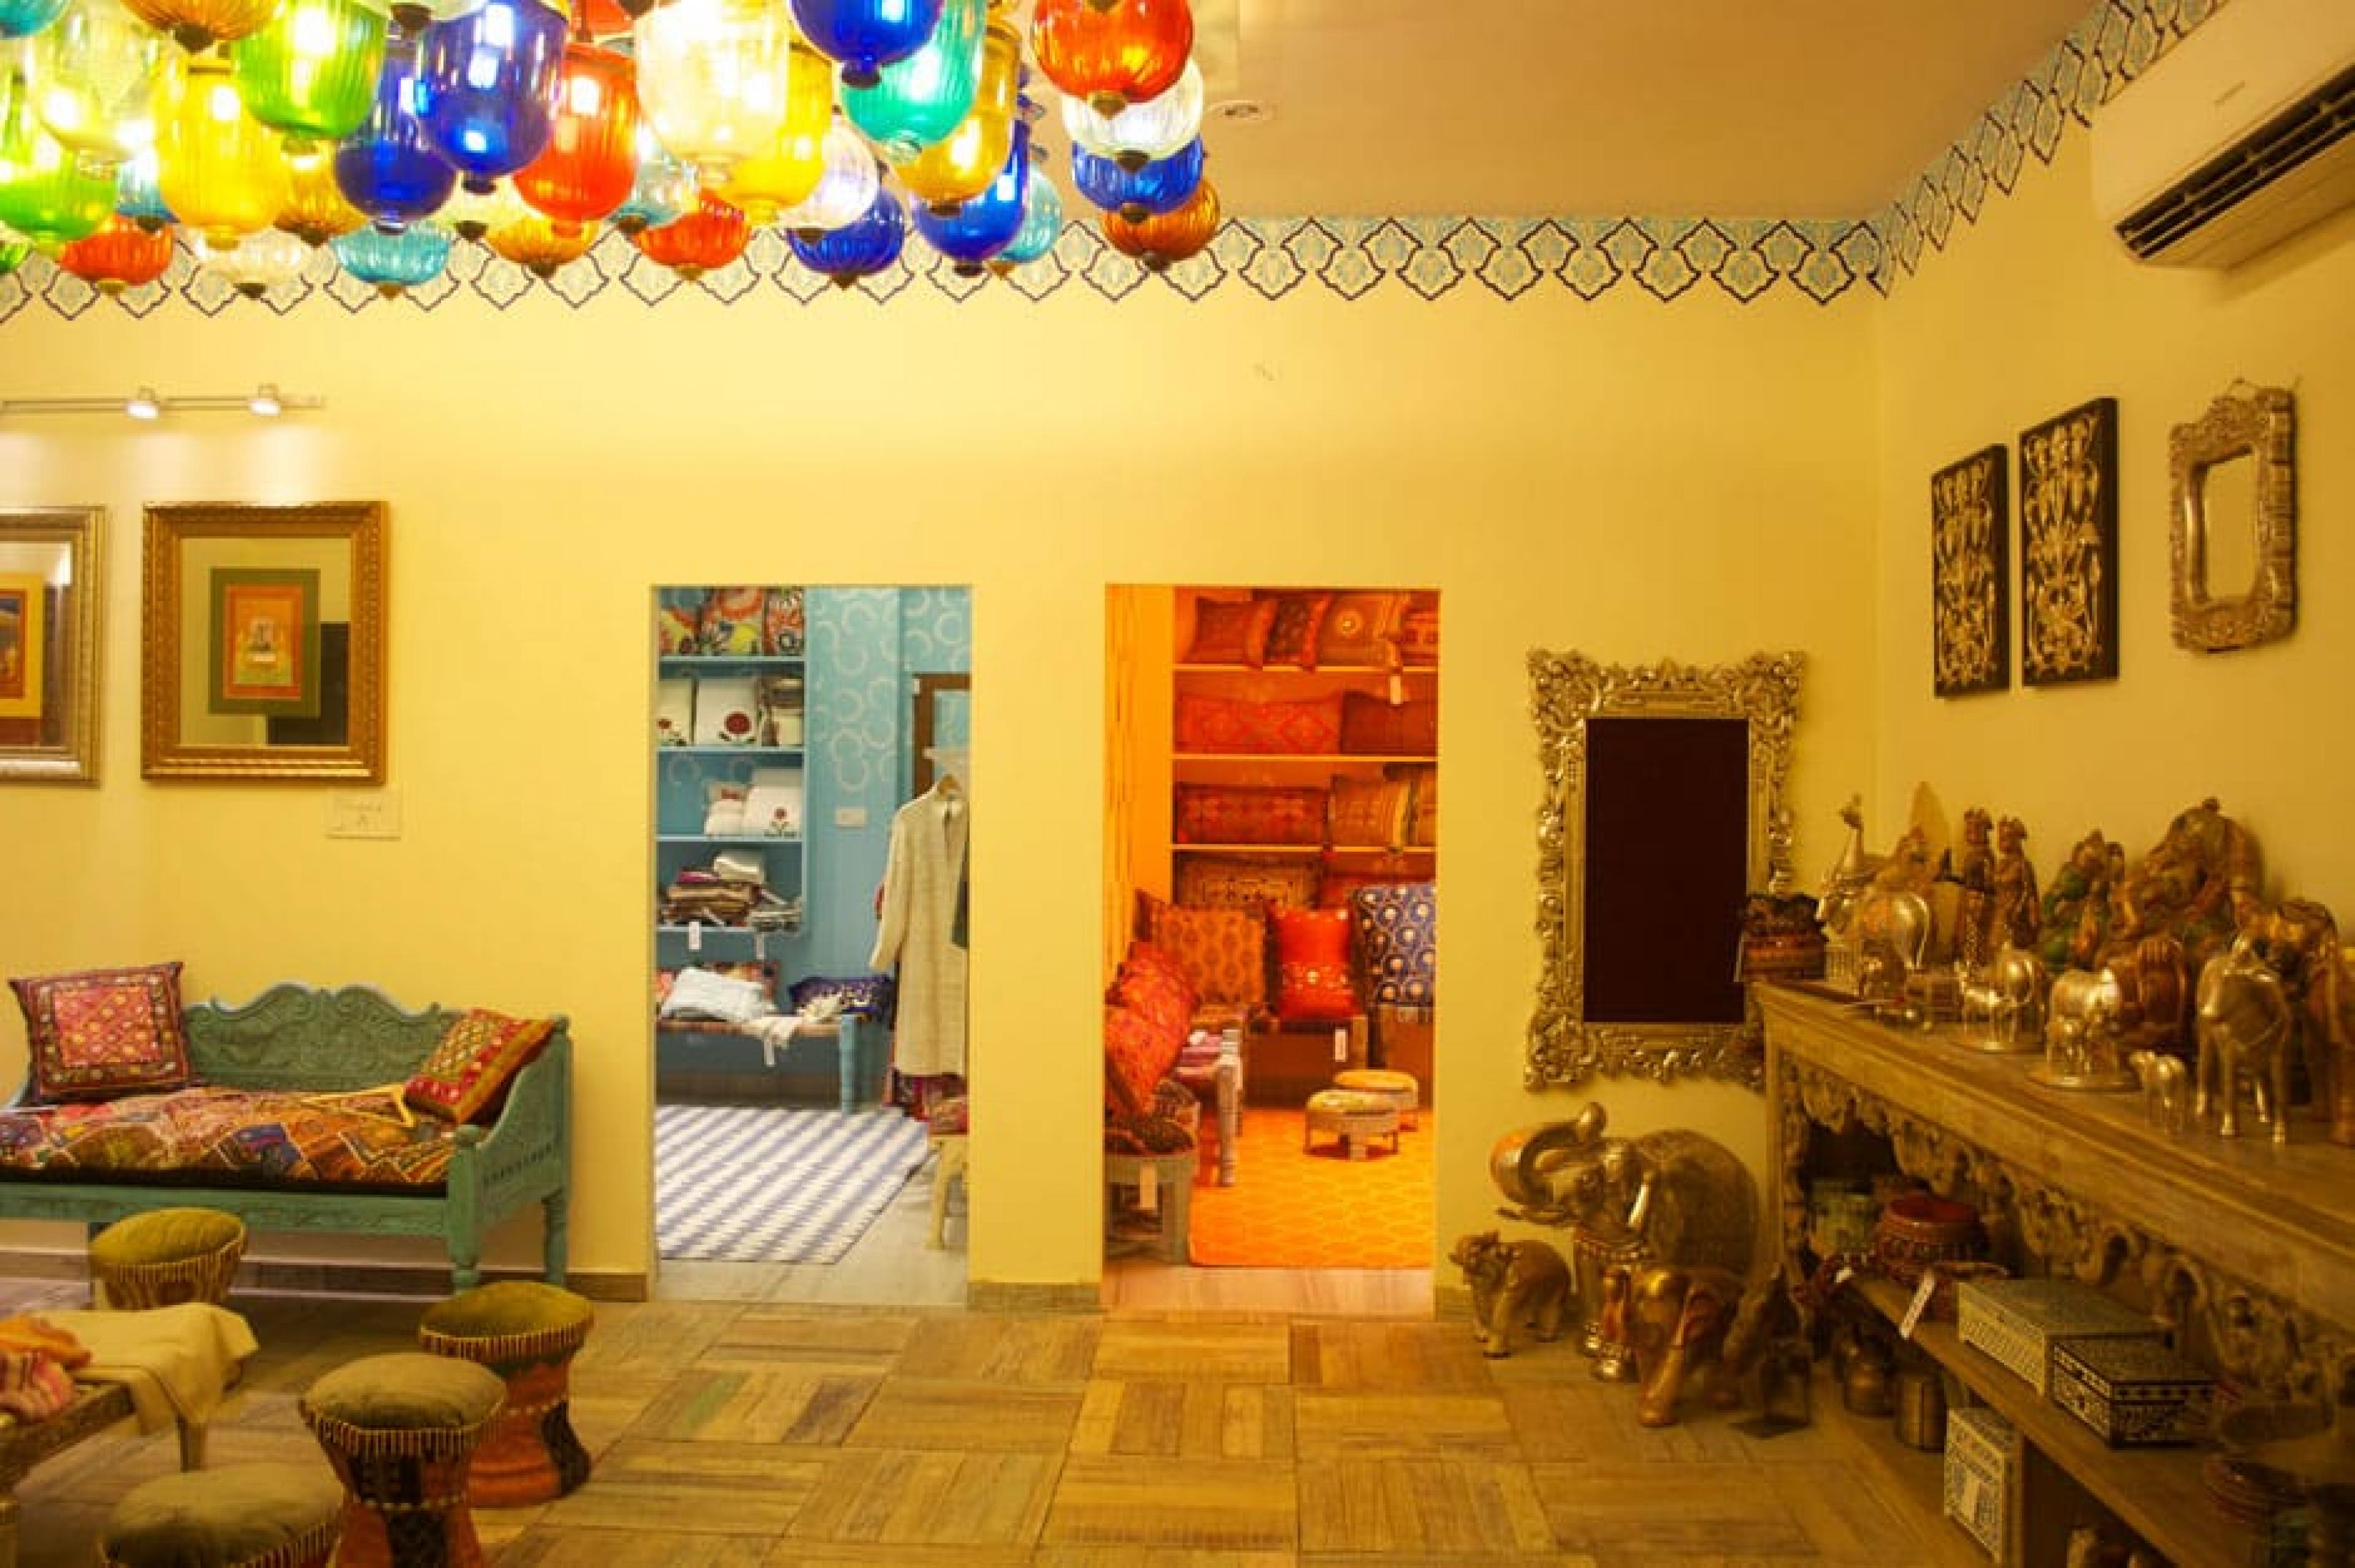 Interior View - Taara, Jaipur, India - Jaipur's Taara boutique